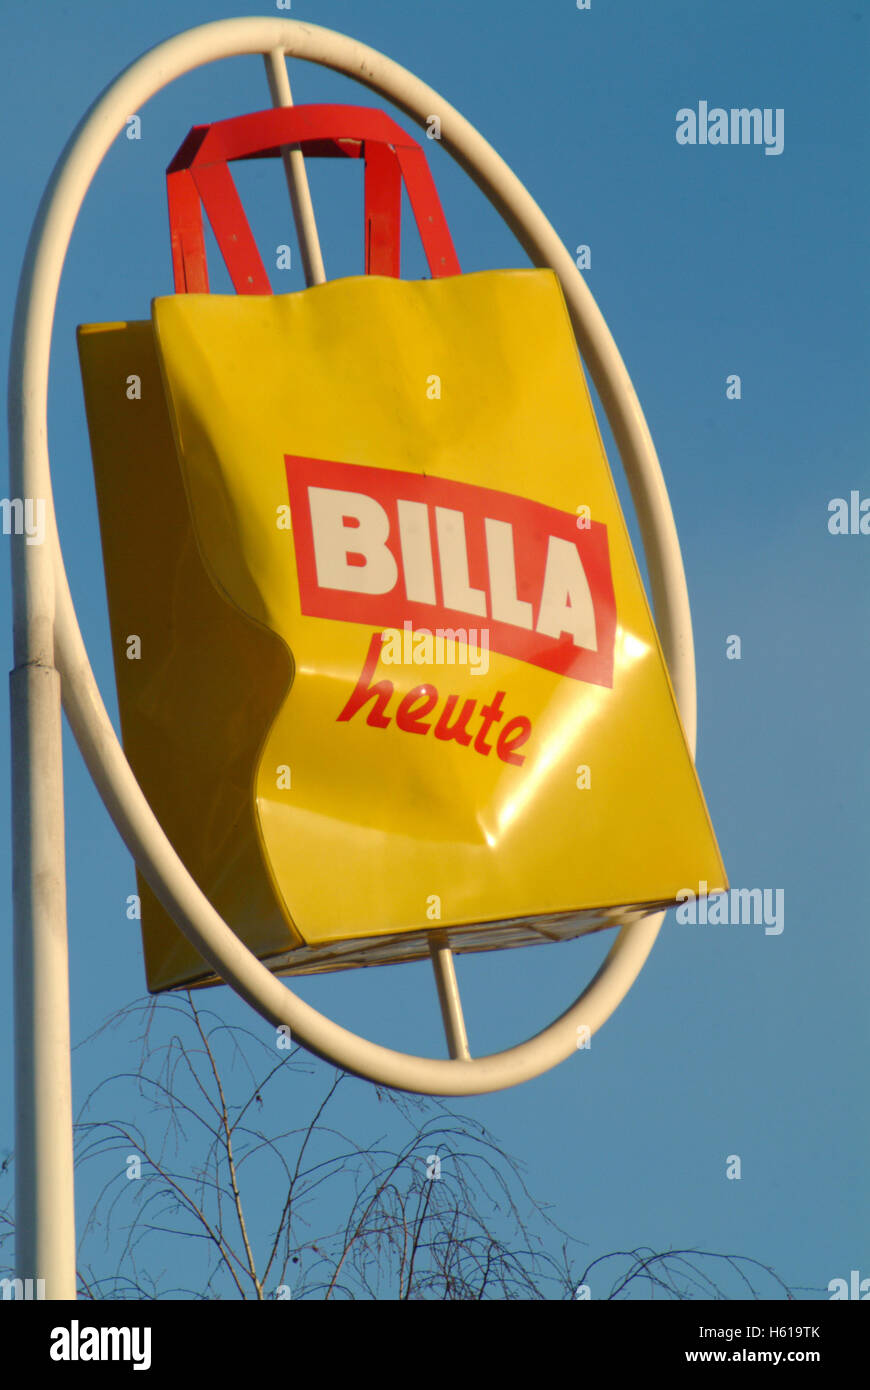 Billa supermarket Stock Photo